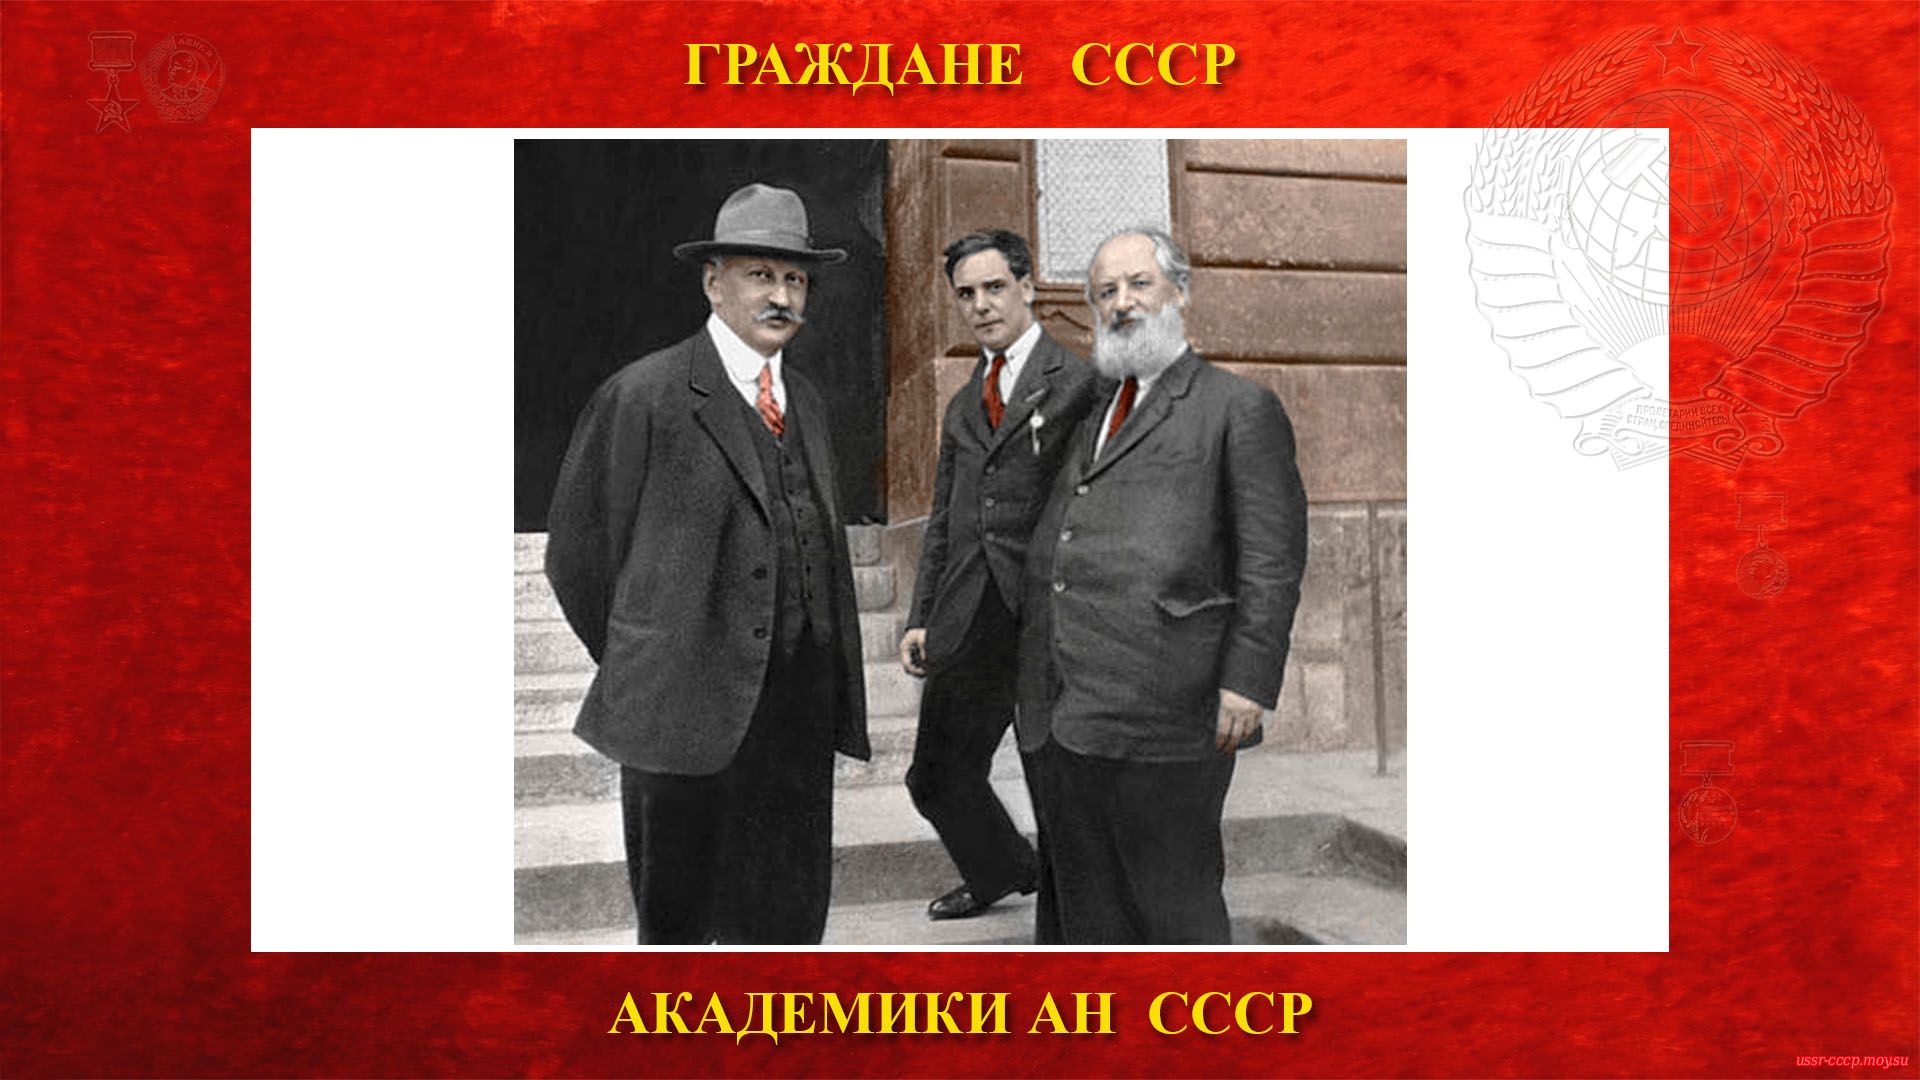 Cлева направо: А.Ф. Иоффе, П.Л. Капица и А.Н. Крылов (примерно 1924 год)